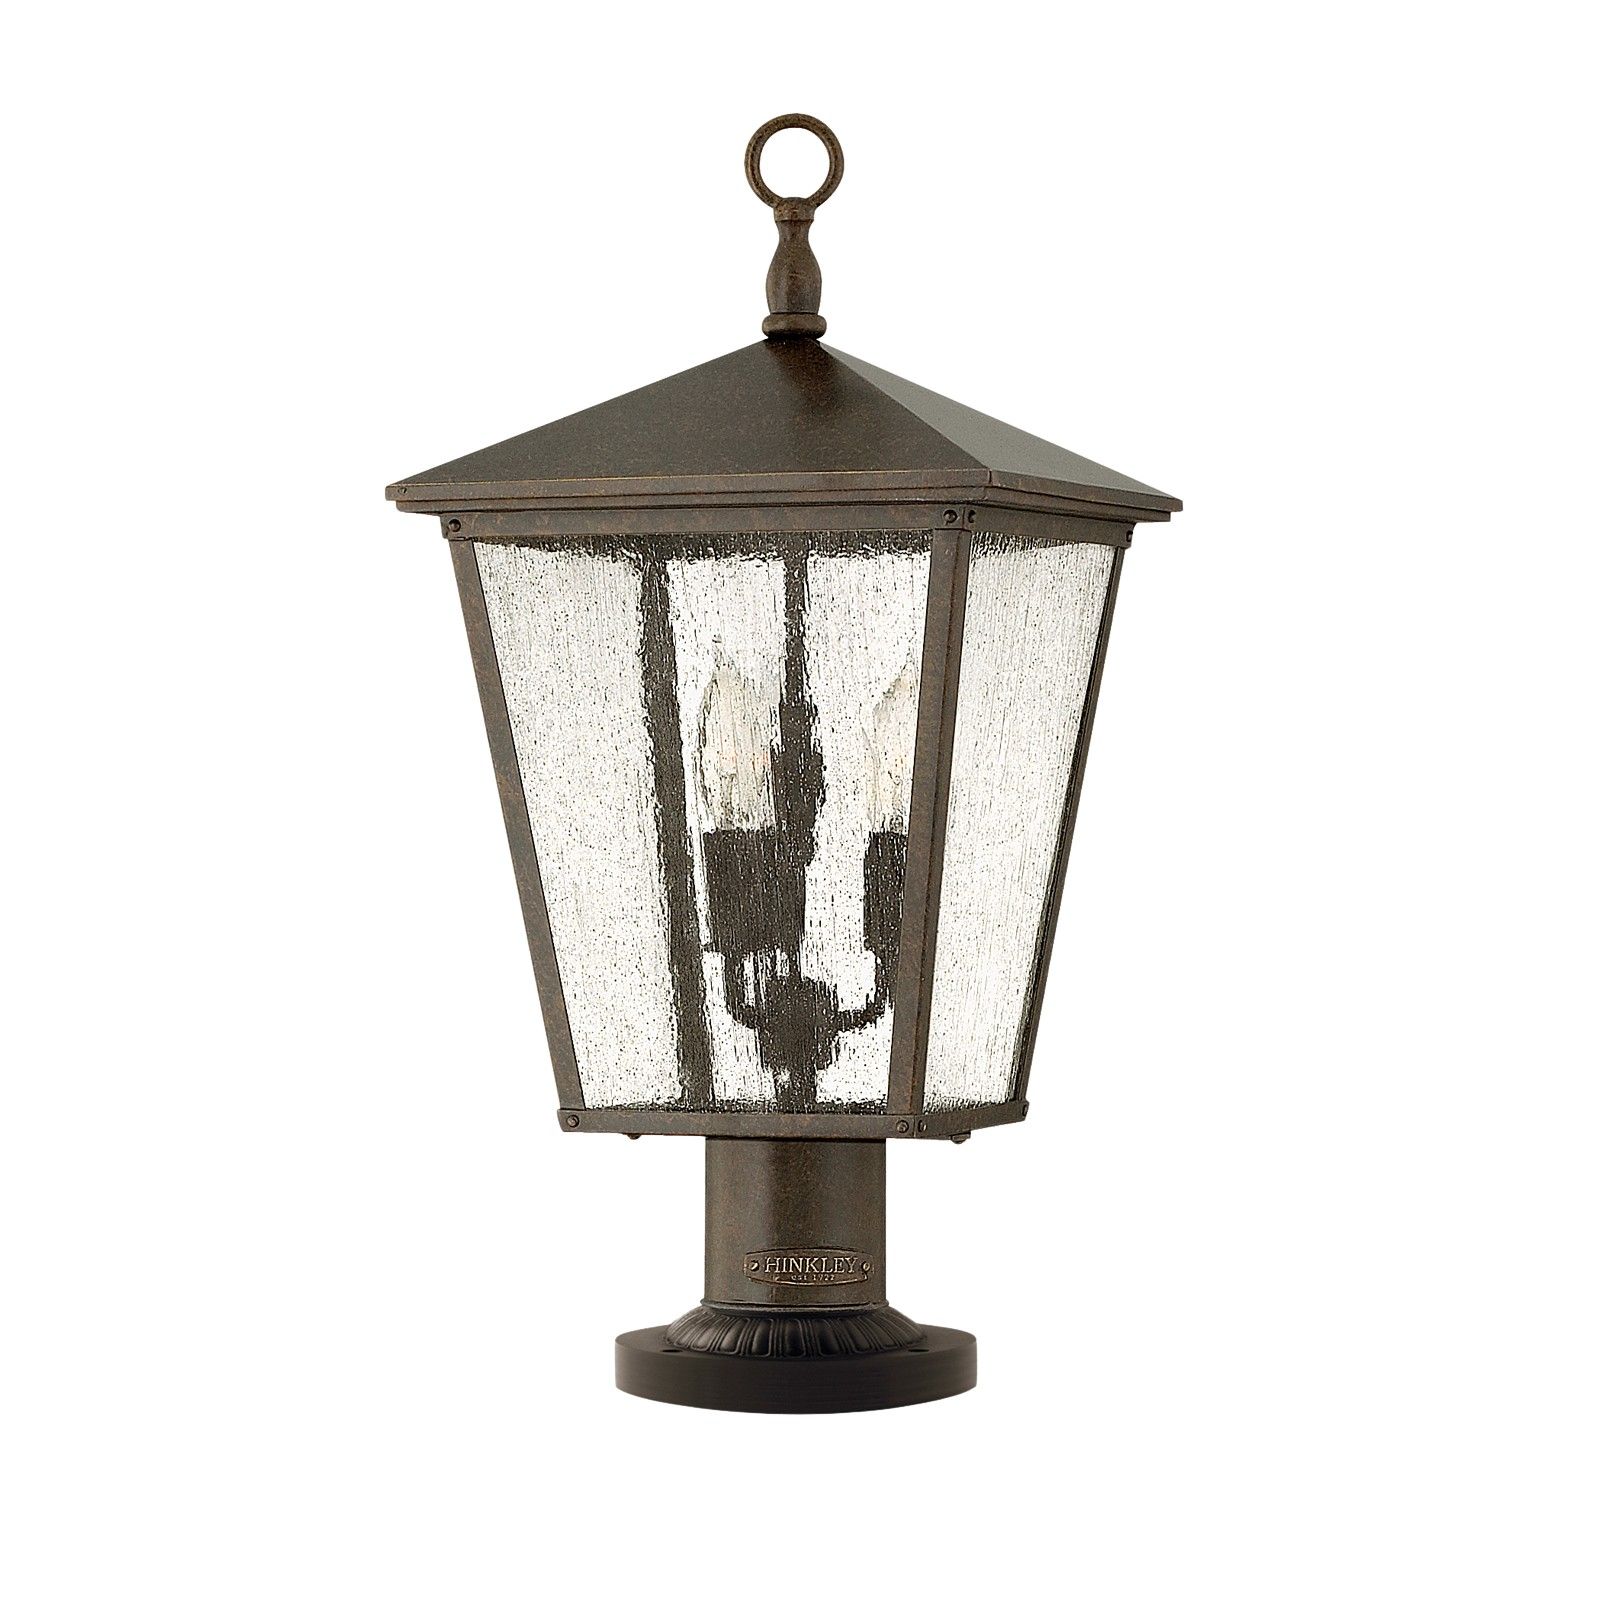 Trellis pedestal lantern - Regency Bronze